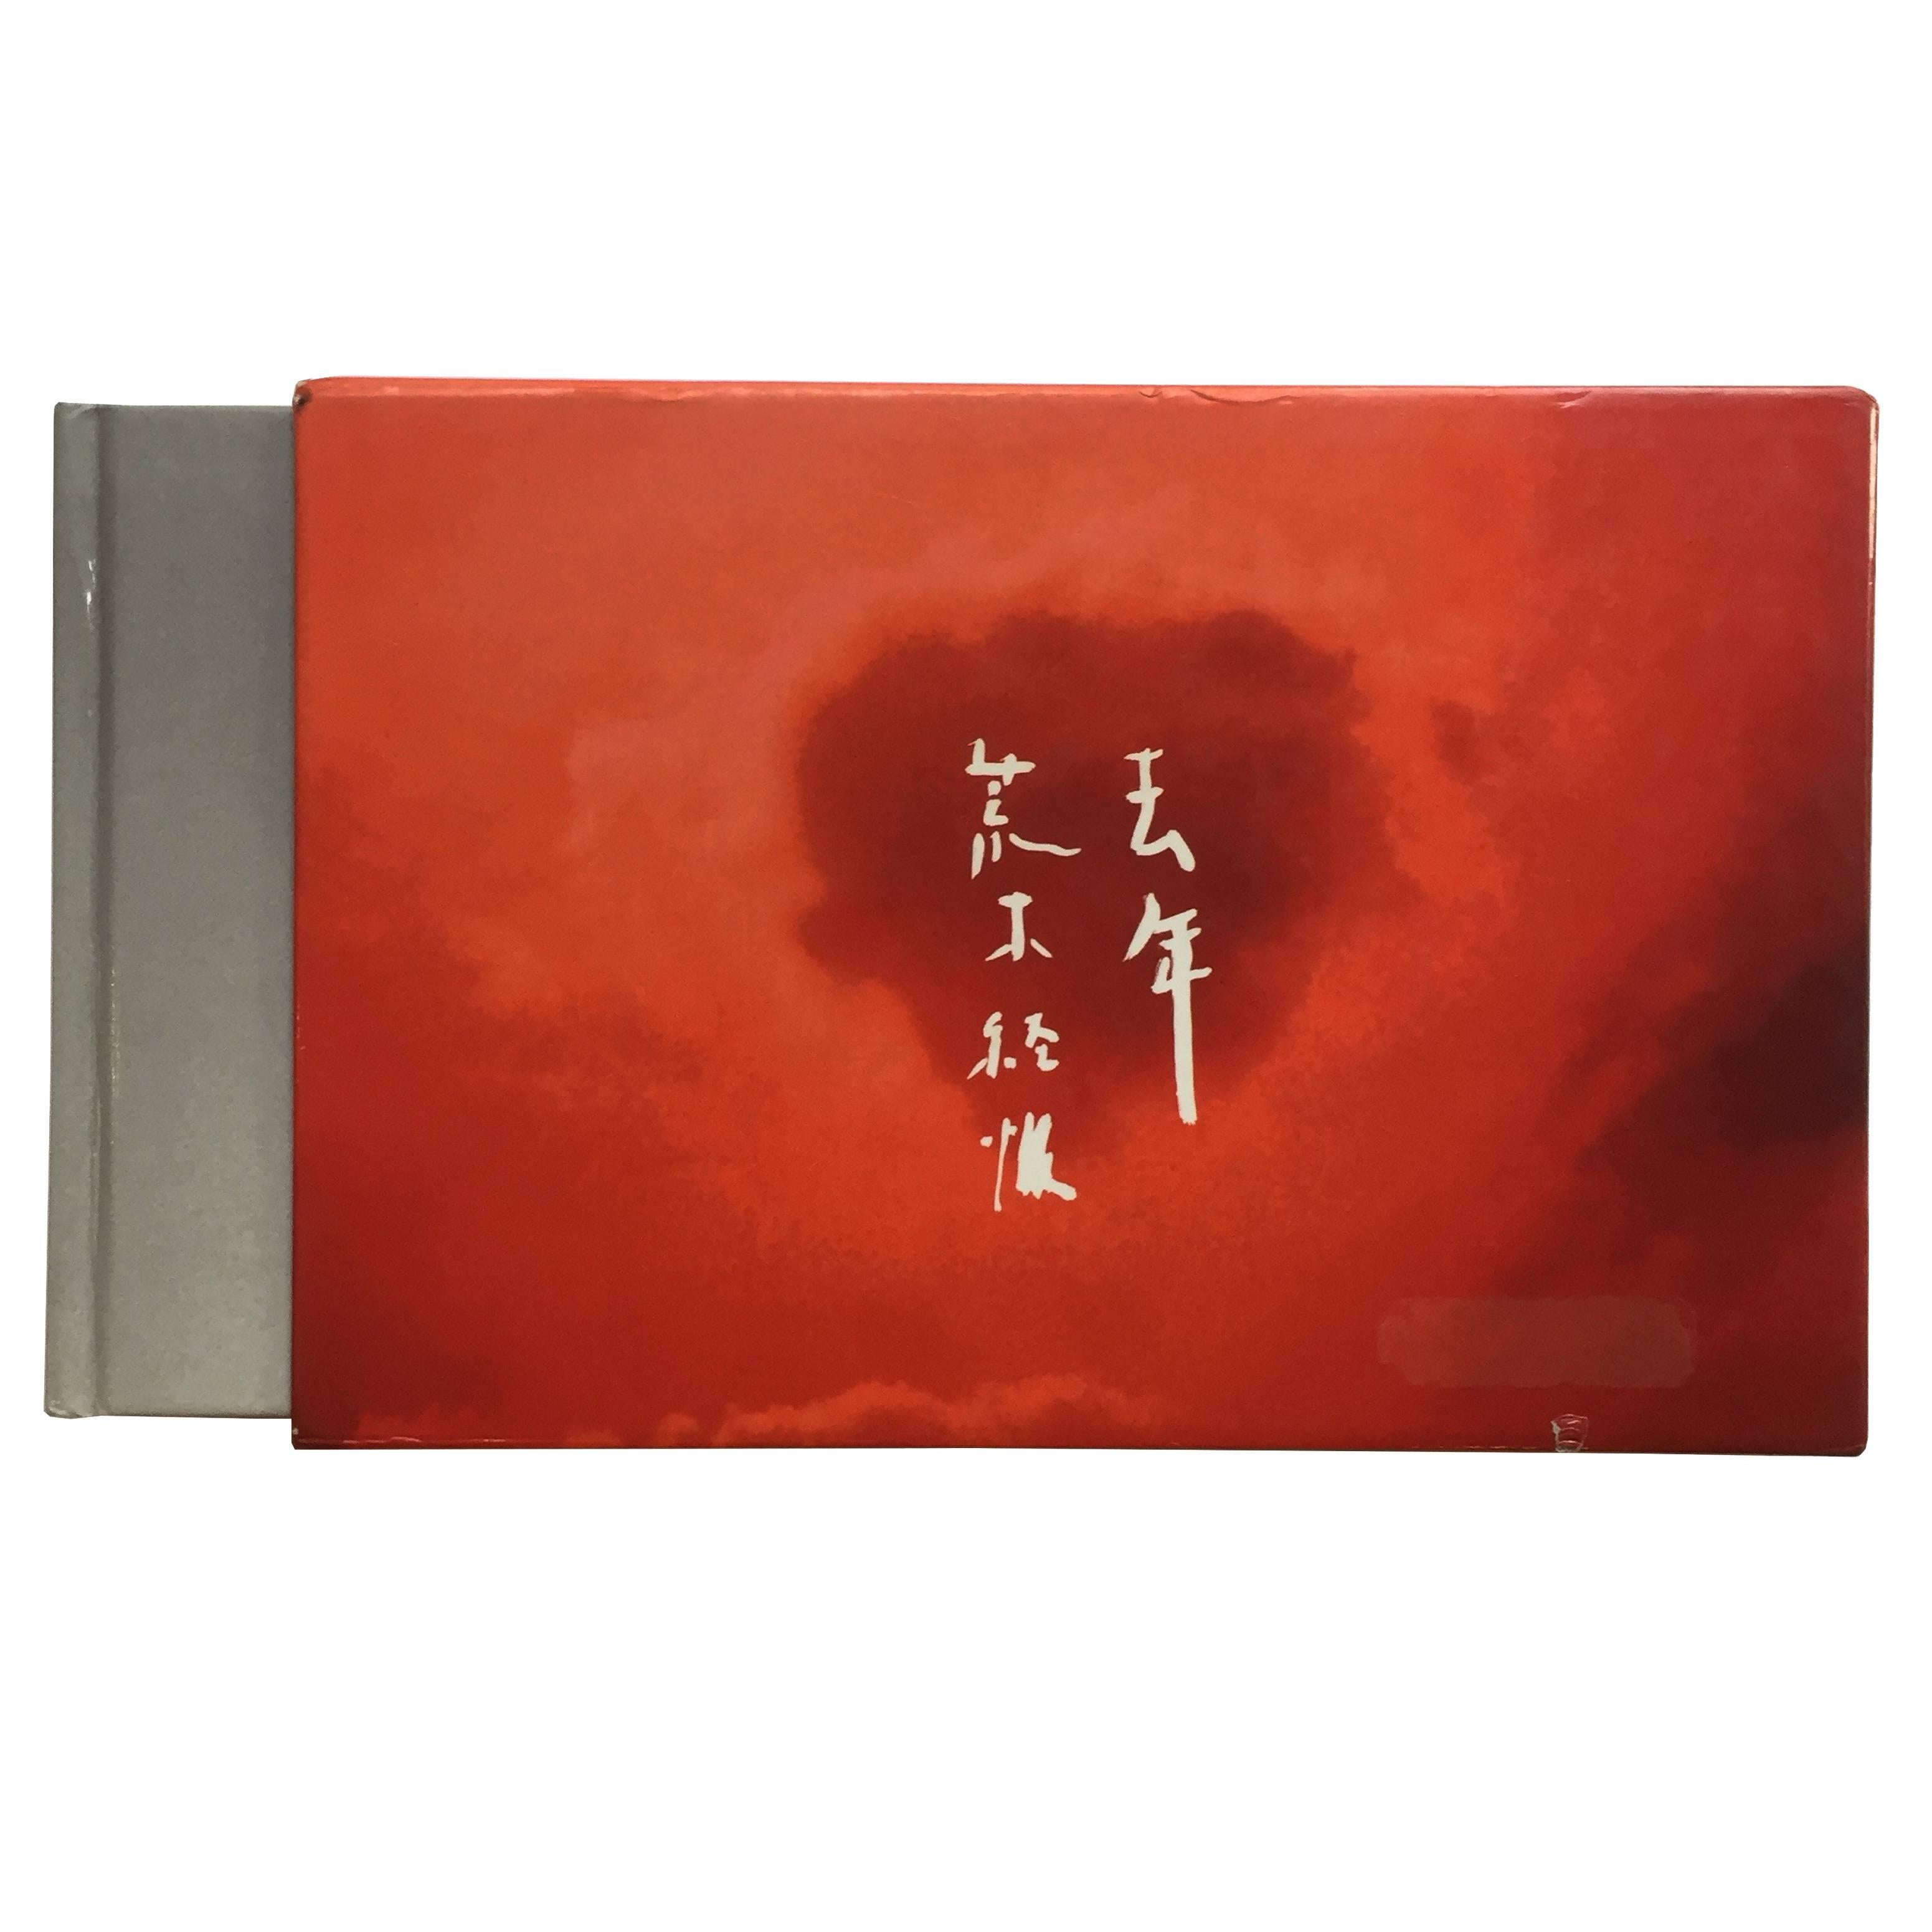 Kyonen - Nobuyoshi Araki - 1st Edition, AaT Room & Eyesencia, 2002